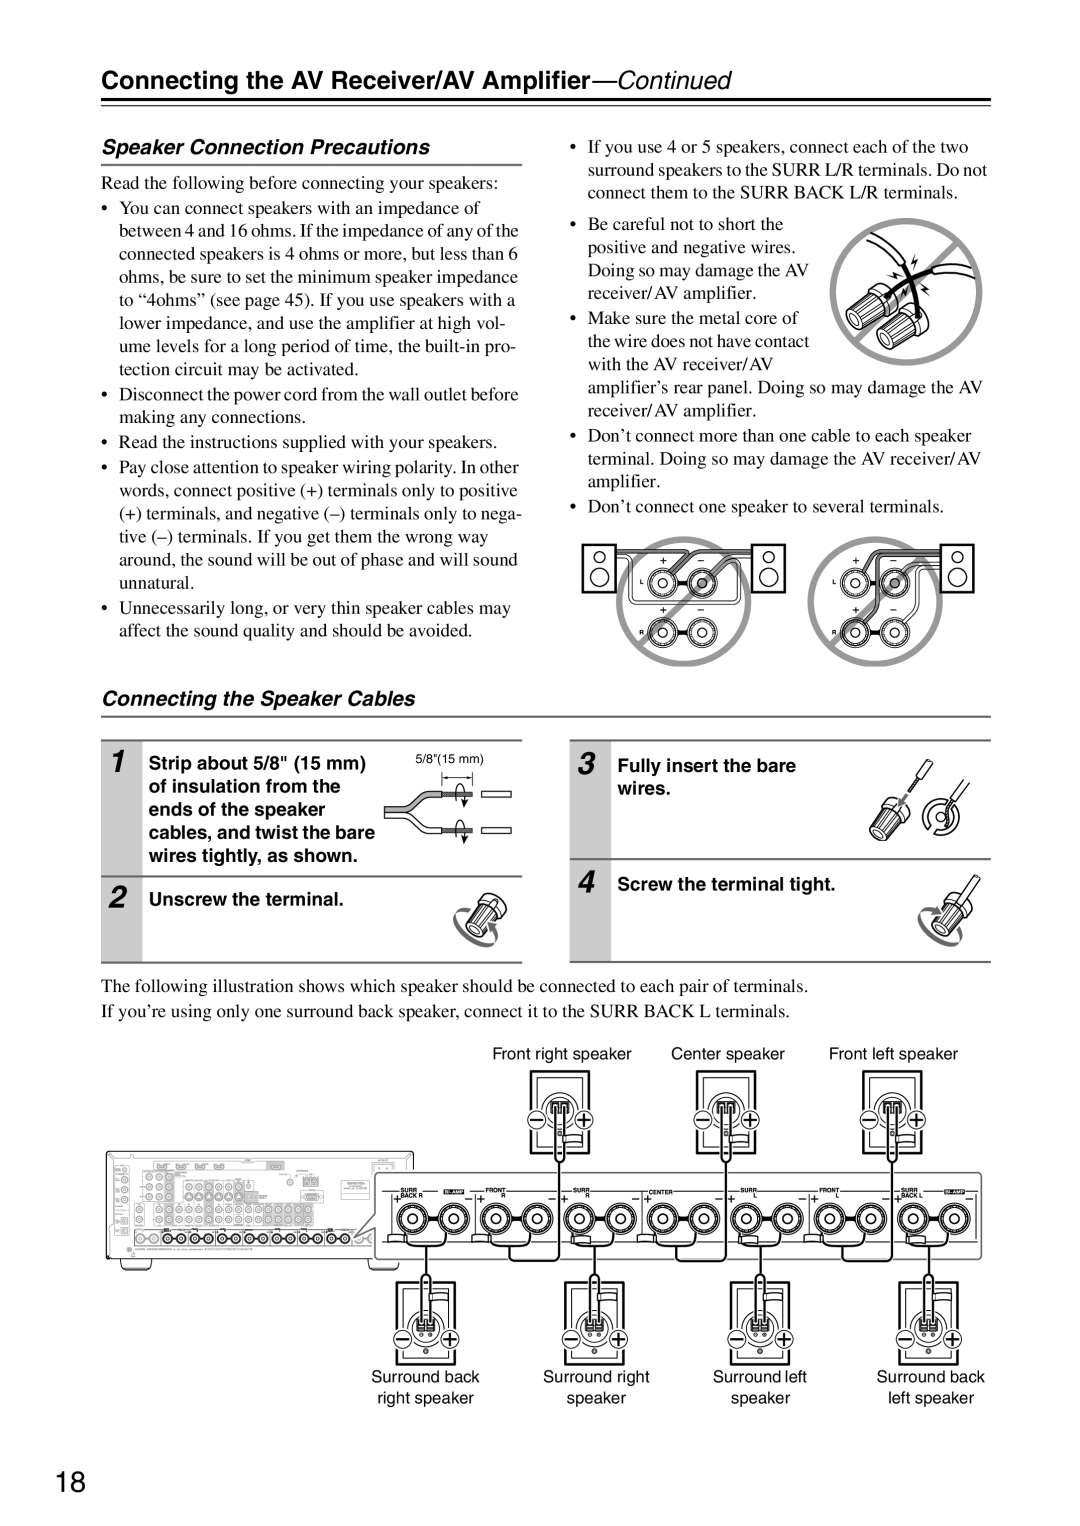 Onkyo TX-SA706 instruction manual Connecting the AV Receiver/AV Amplifier—Continued, Speaker Connection Precautions 